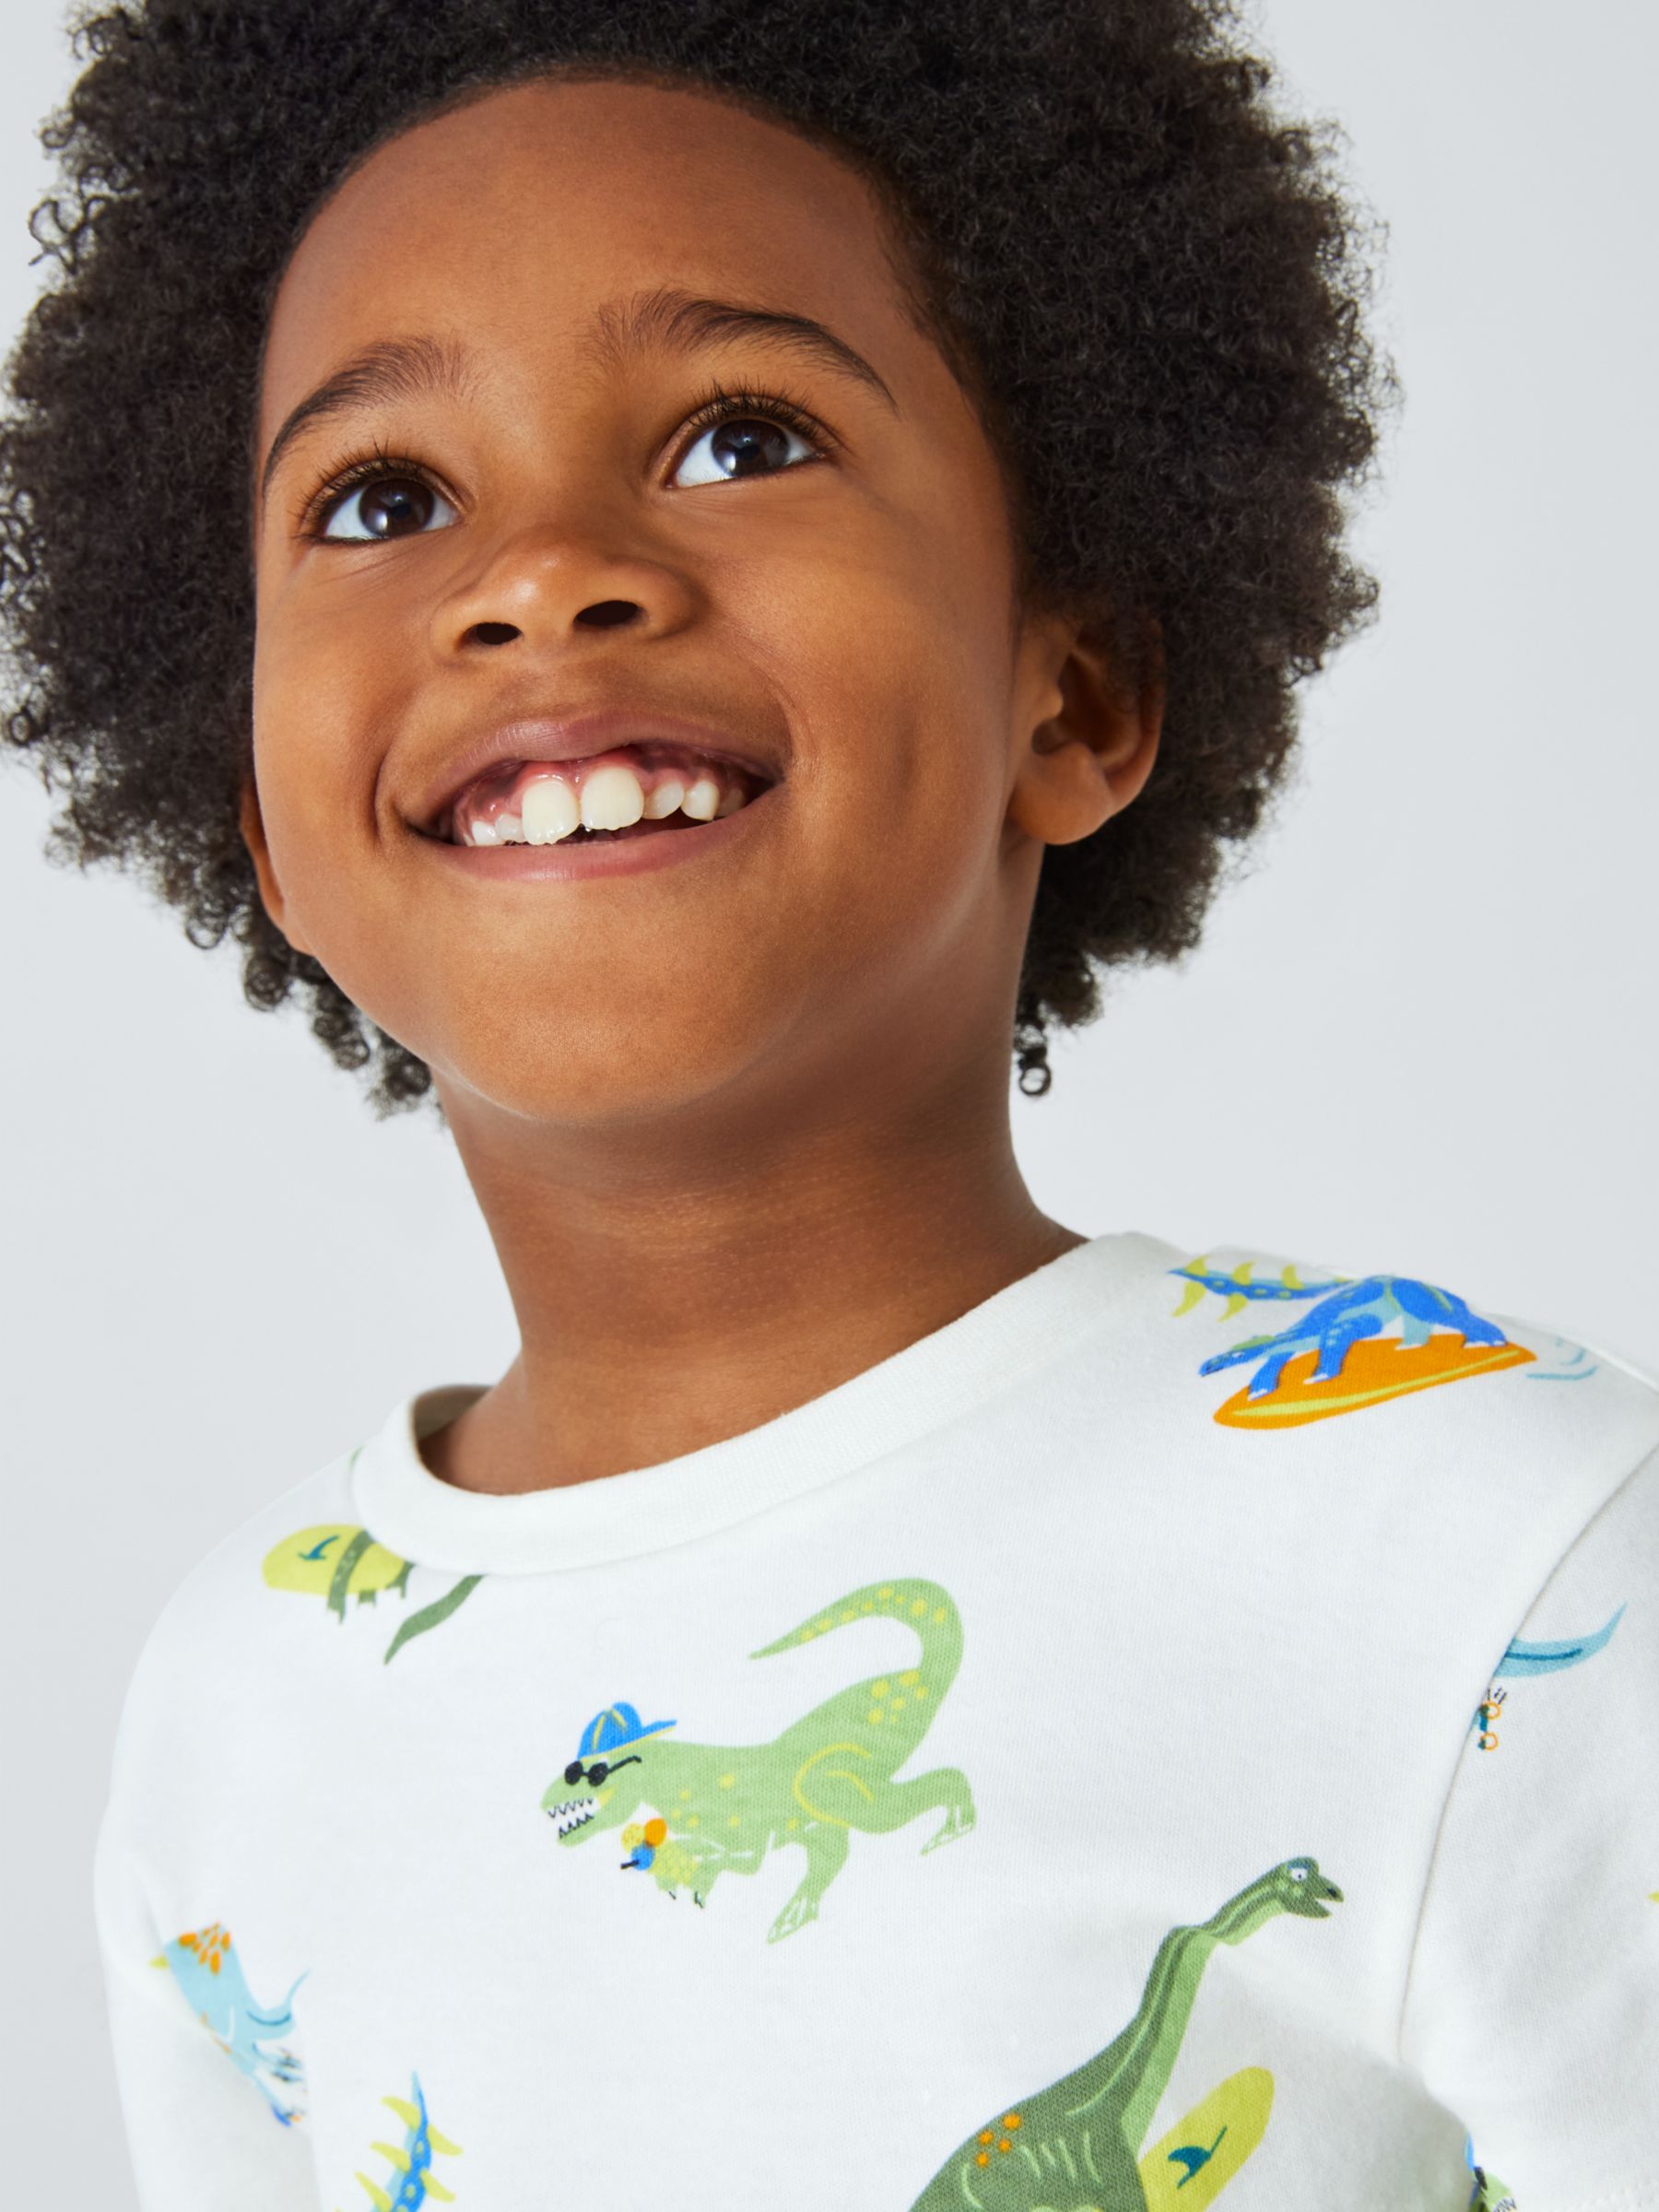 John Lewis Kids' Summer Plain/Dinosaur Short Pyjama Sets, Pack of 2, Multi, 7 years